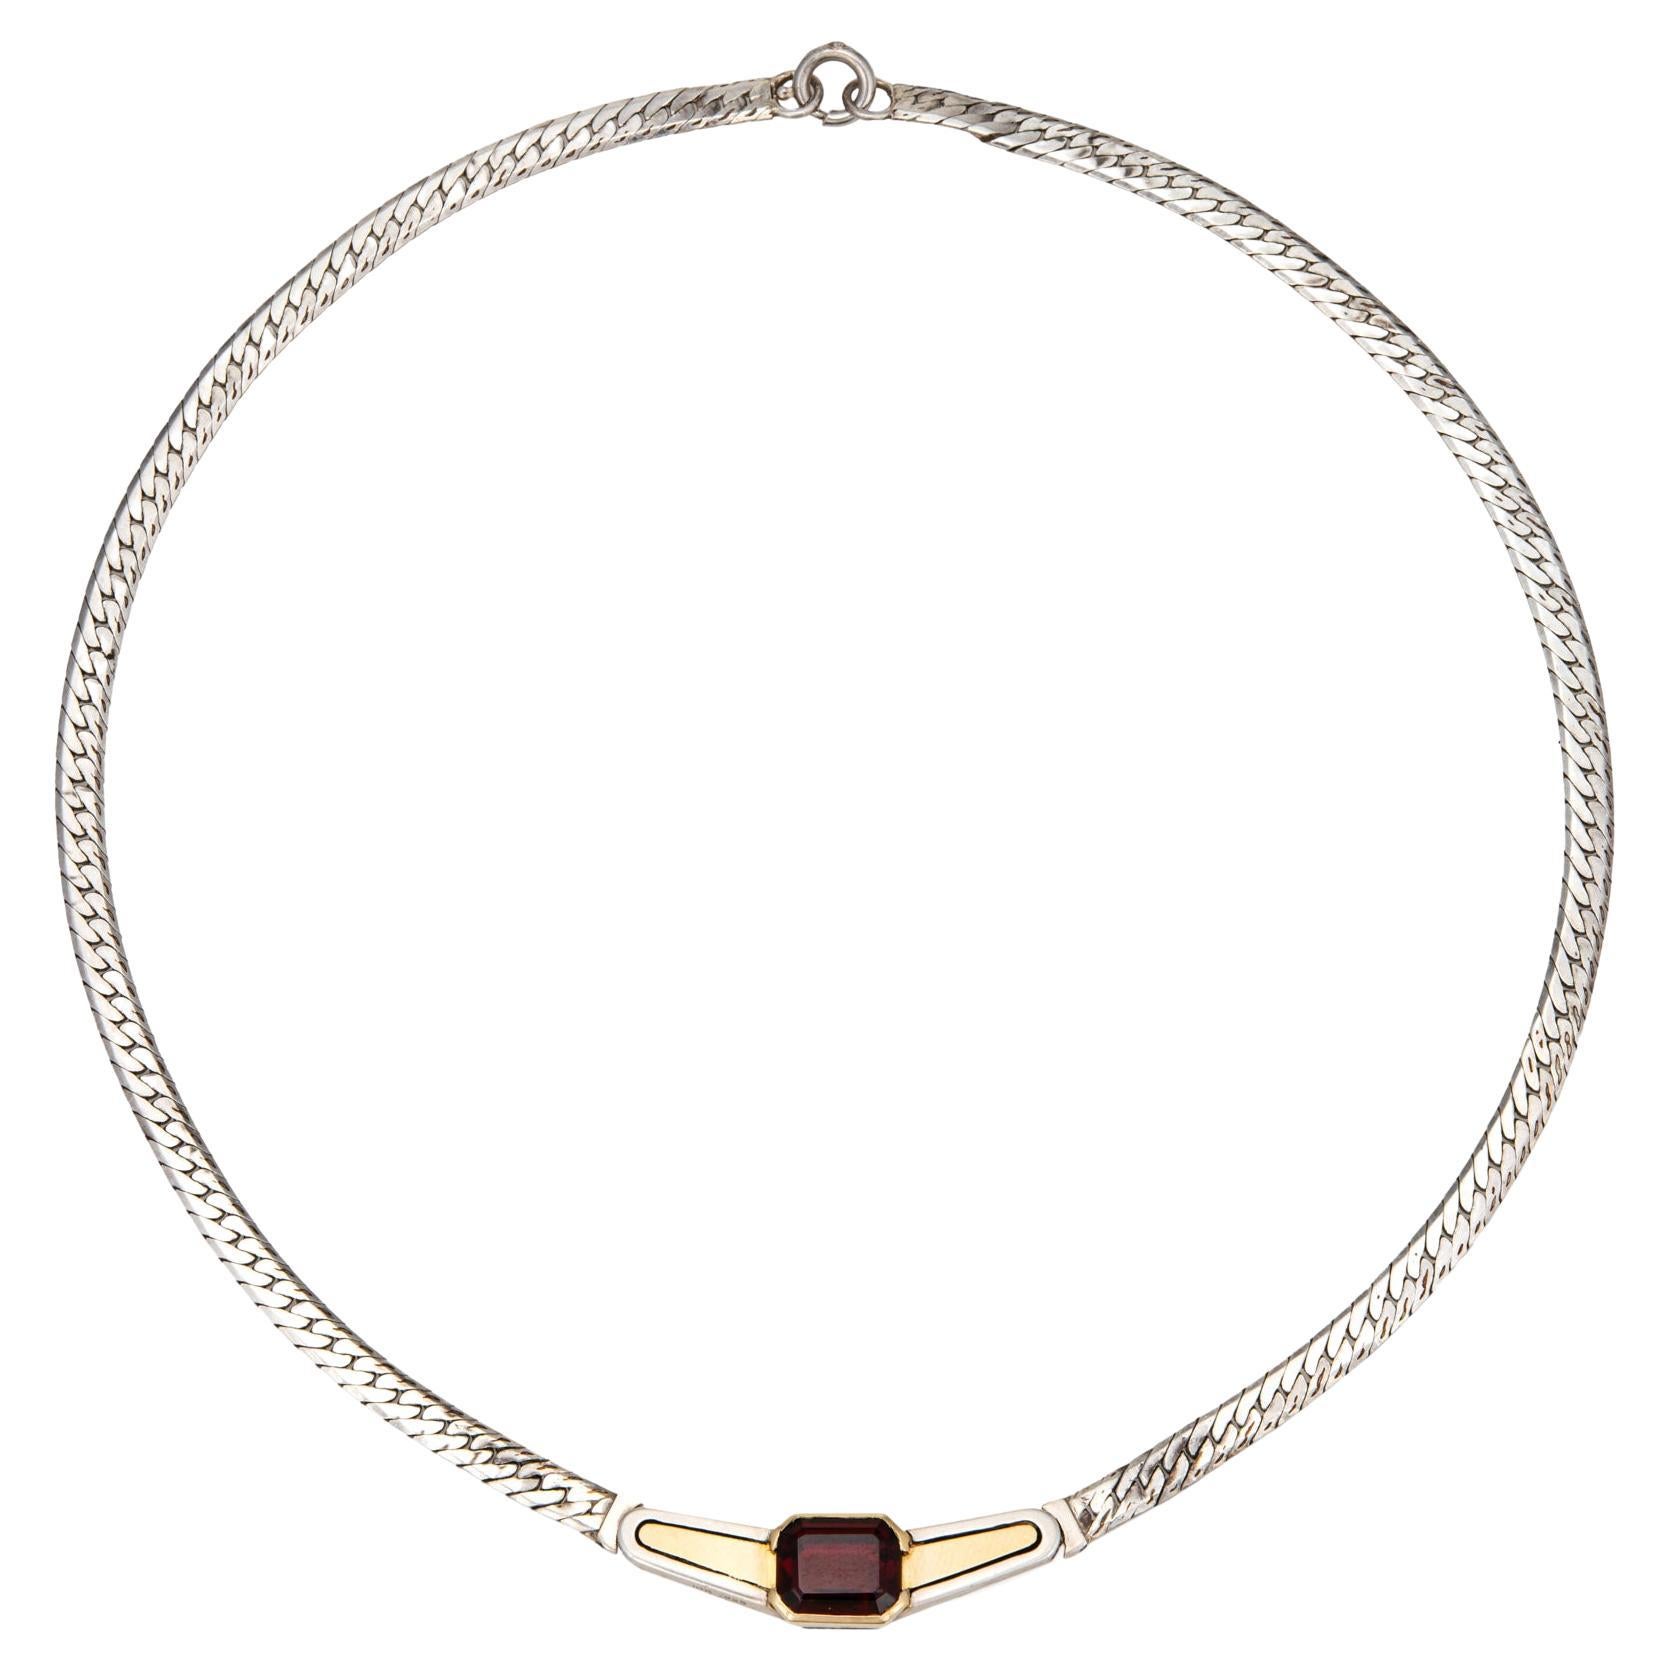 Vintage 70s Cartier Garnet Necklace Sterling Silver 18k Gold Signed Jewelry 15"